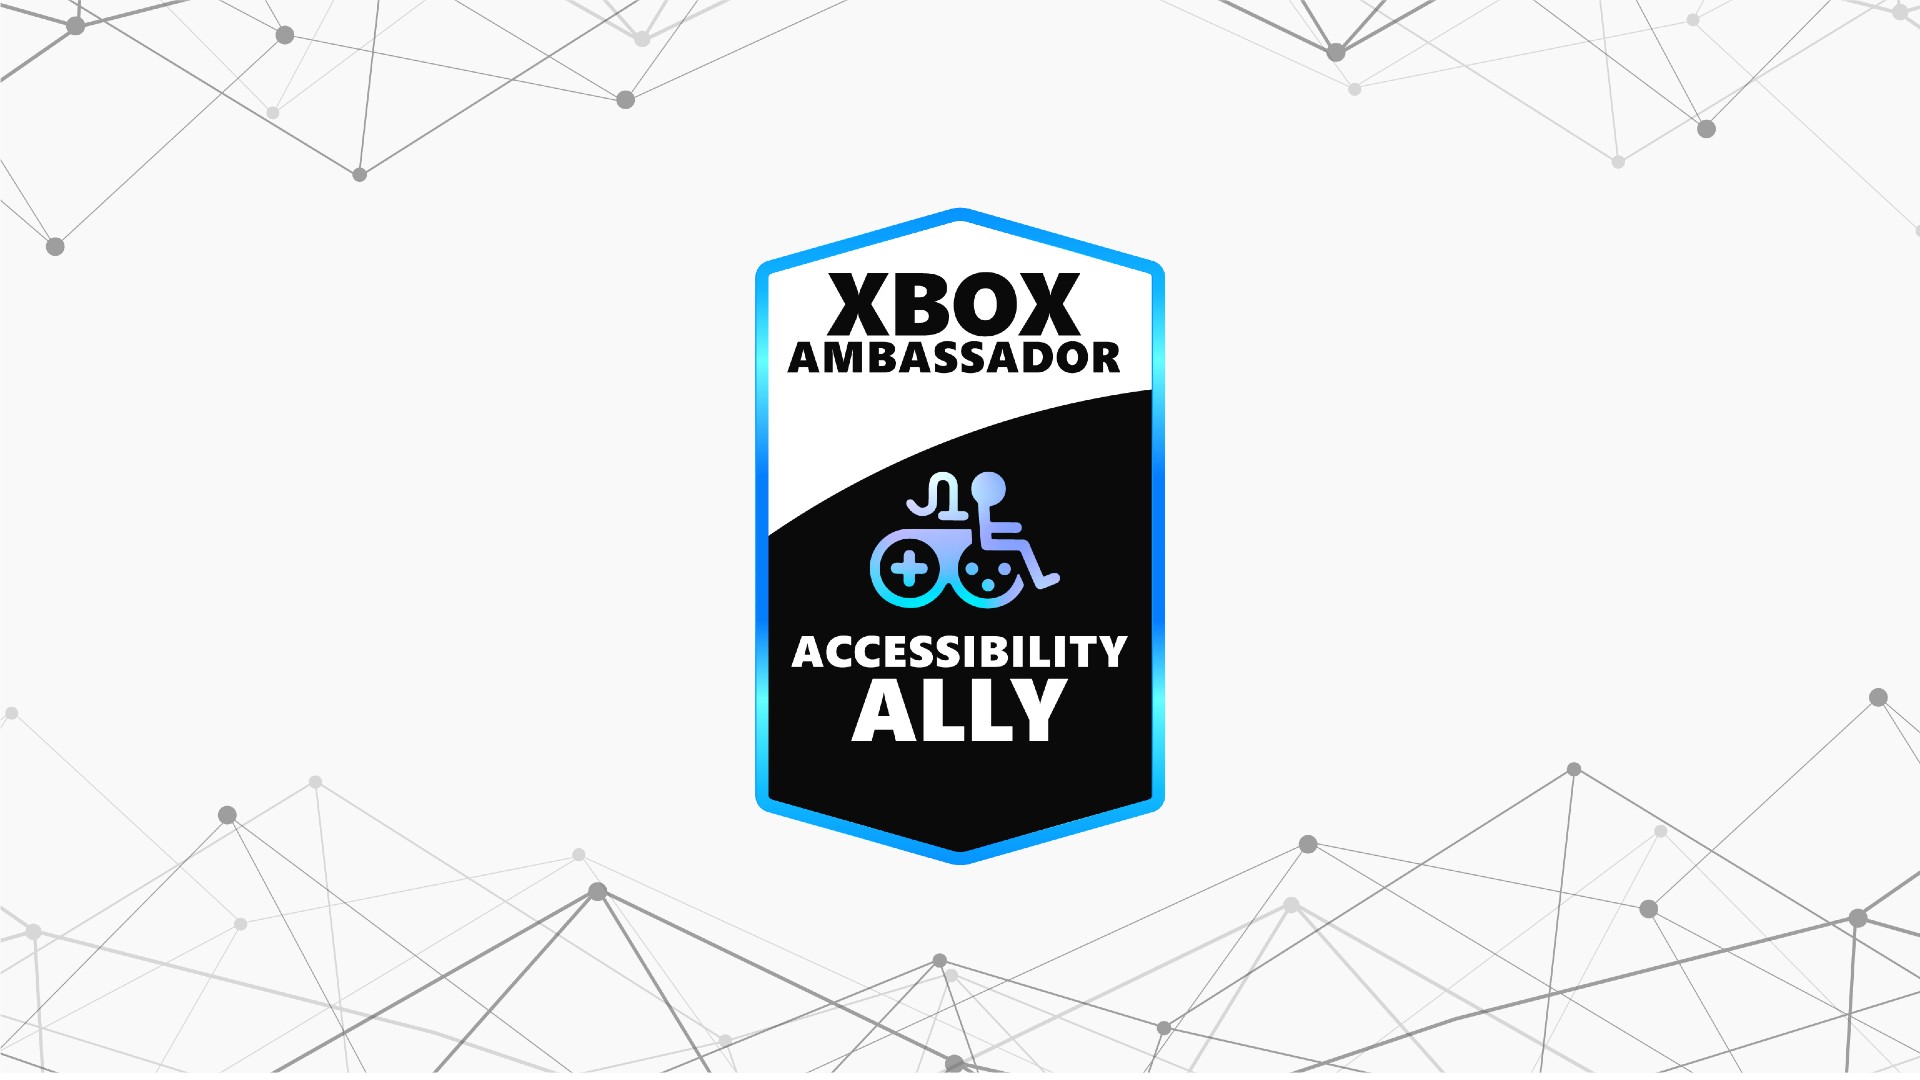 Xbox-Ambassador-Accessibility-Ally-01b39d53f4f7e985e2fe.jpg